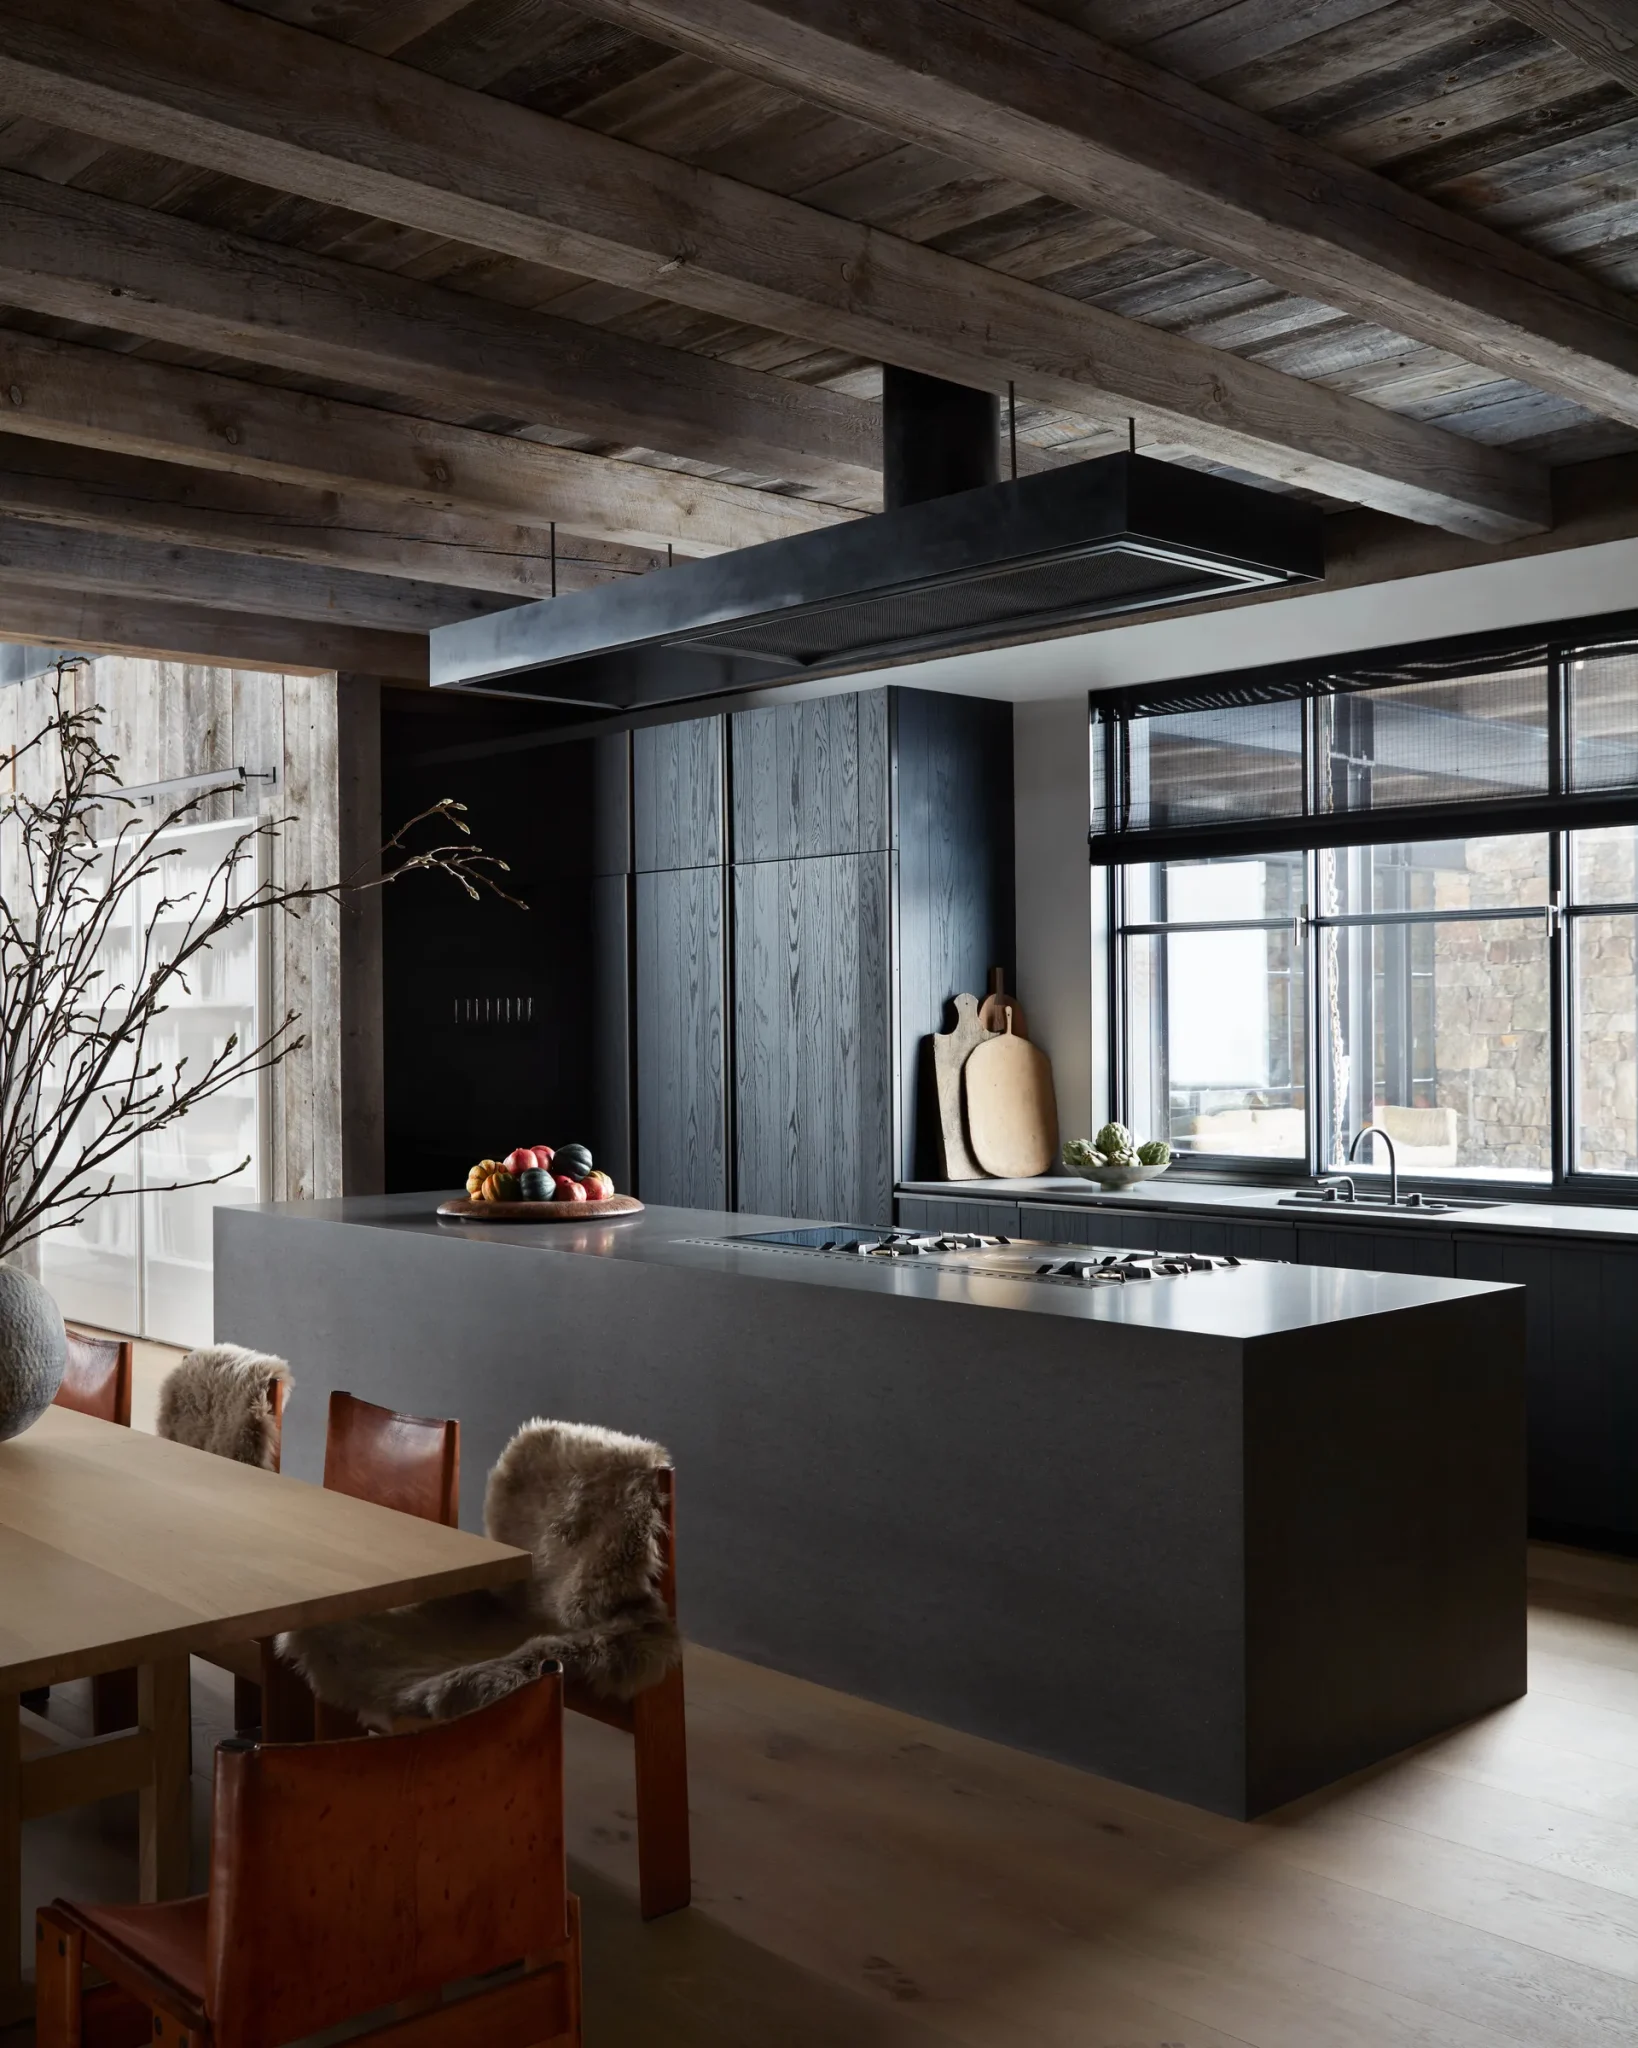 winter chalet kitchen by architect Greg Matthews and the interior designer Olivia Williams